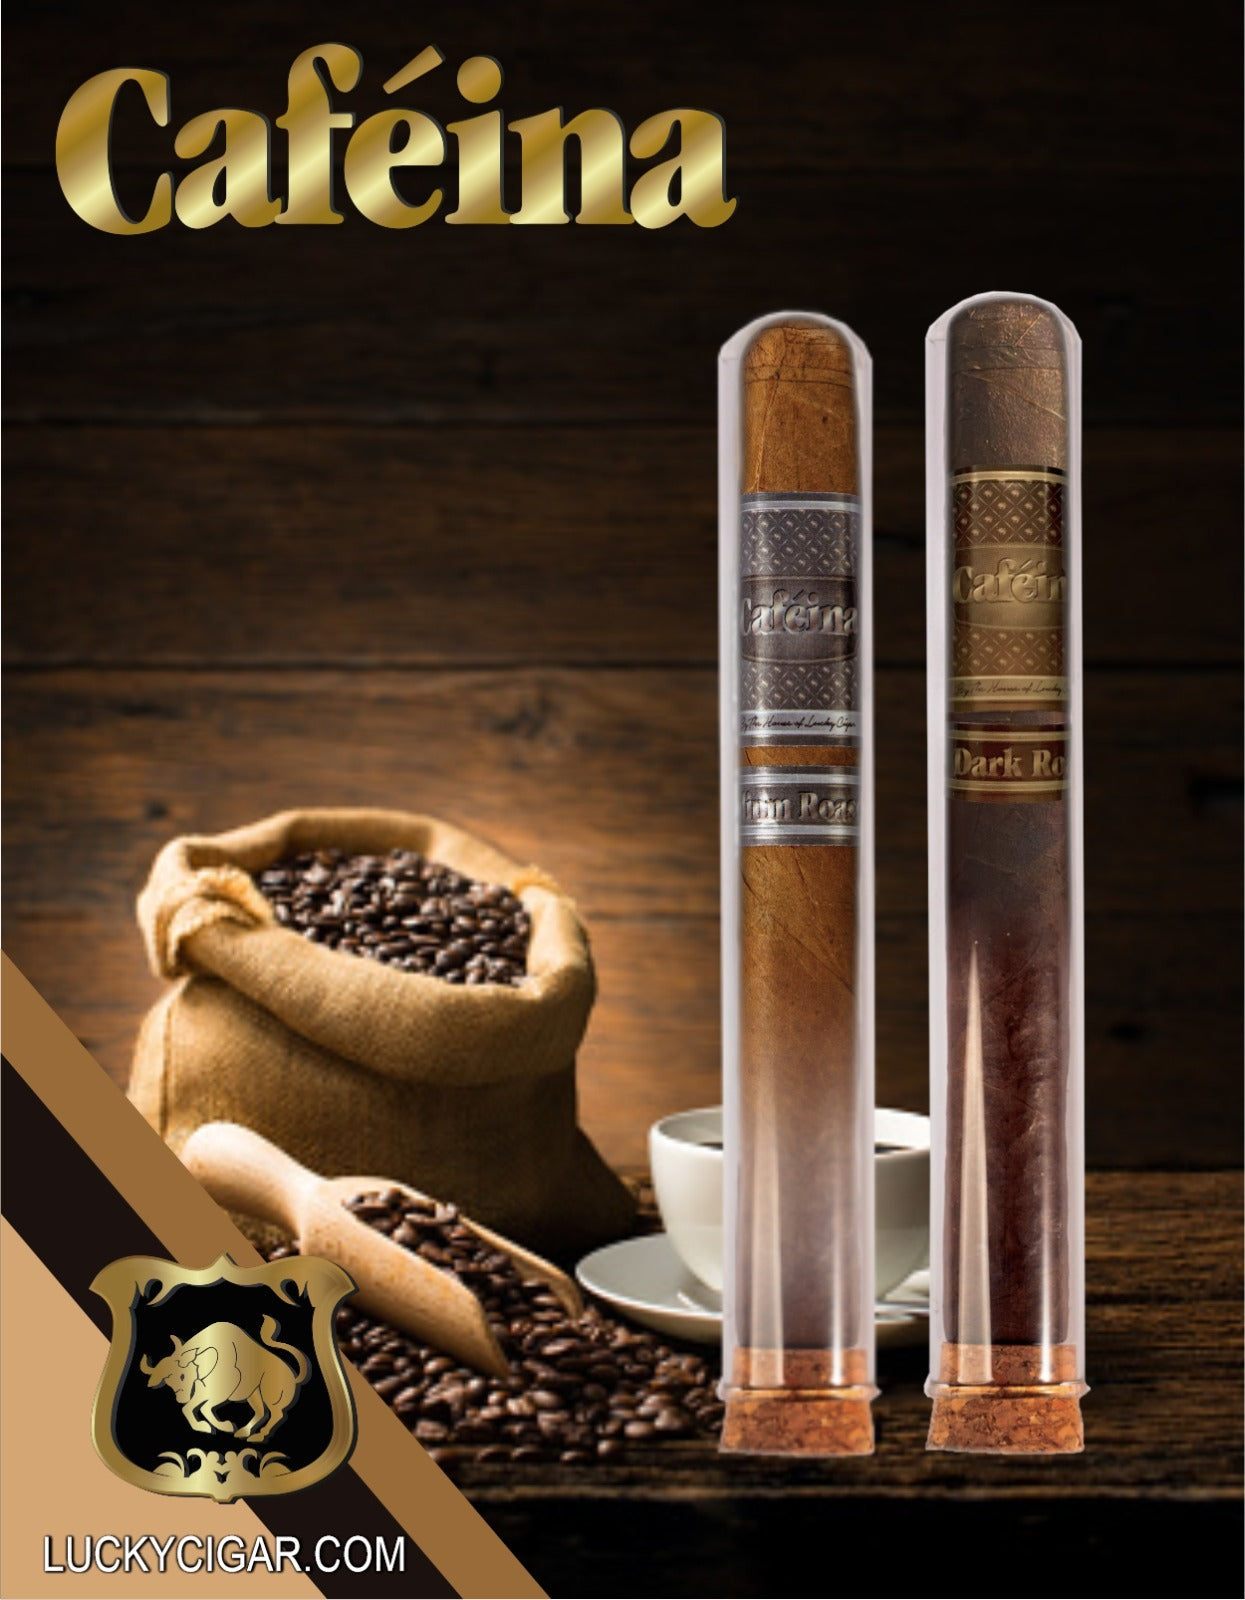 Infused Cigars: Set of 2 Cafeina Roast Cigars in Crystal - 1 Dark 6x50, 1 Medium 6x50